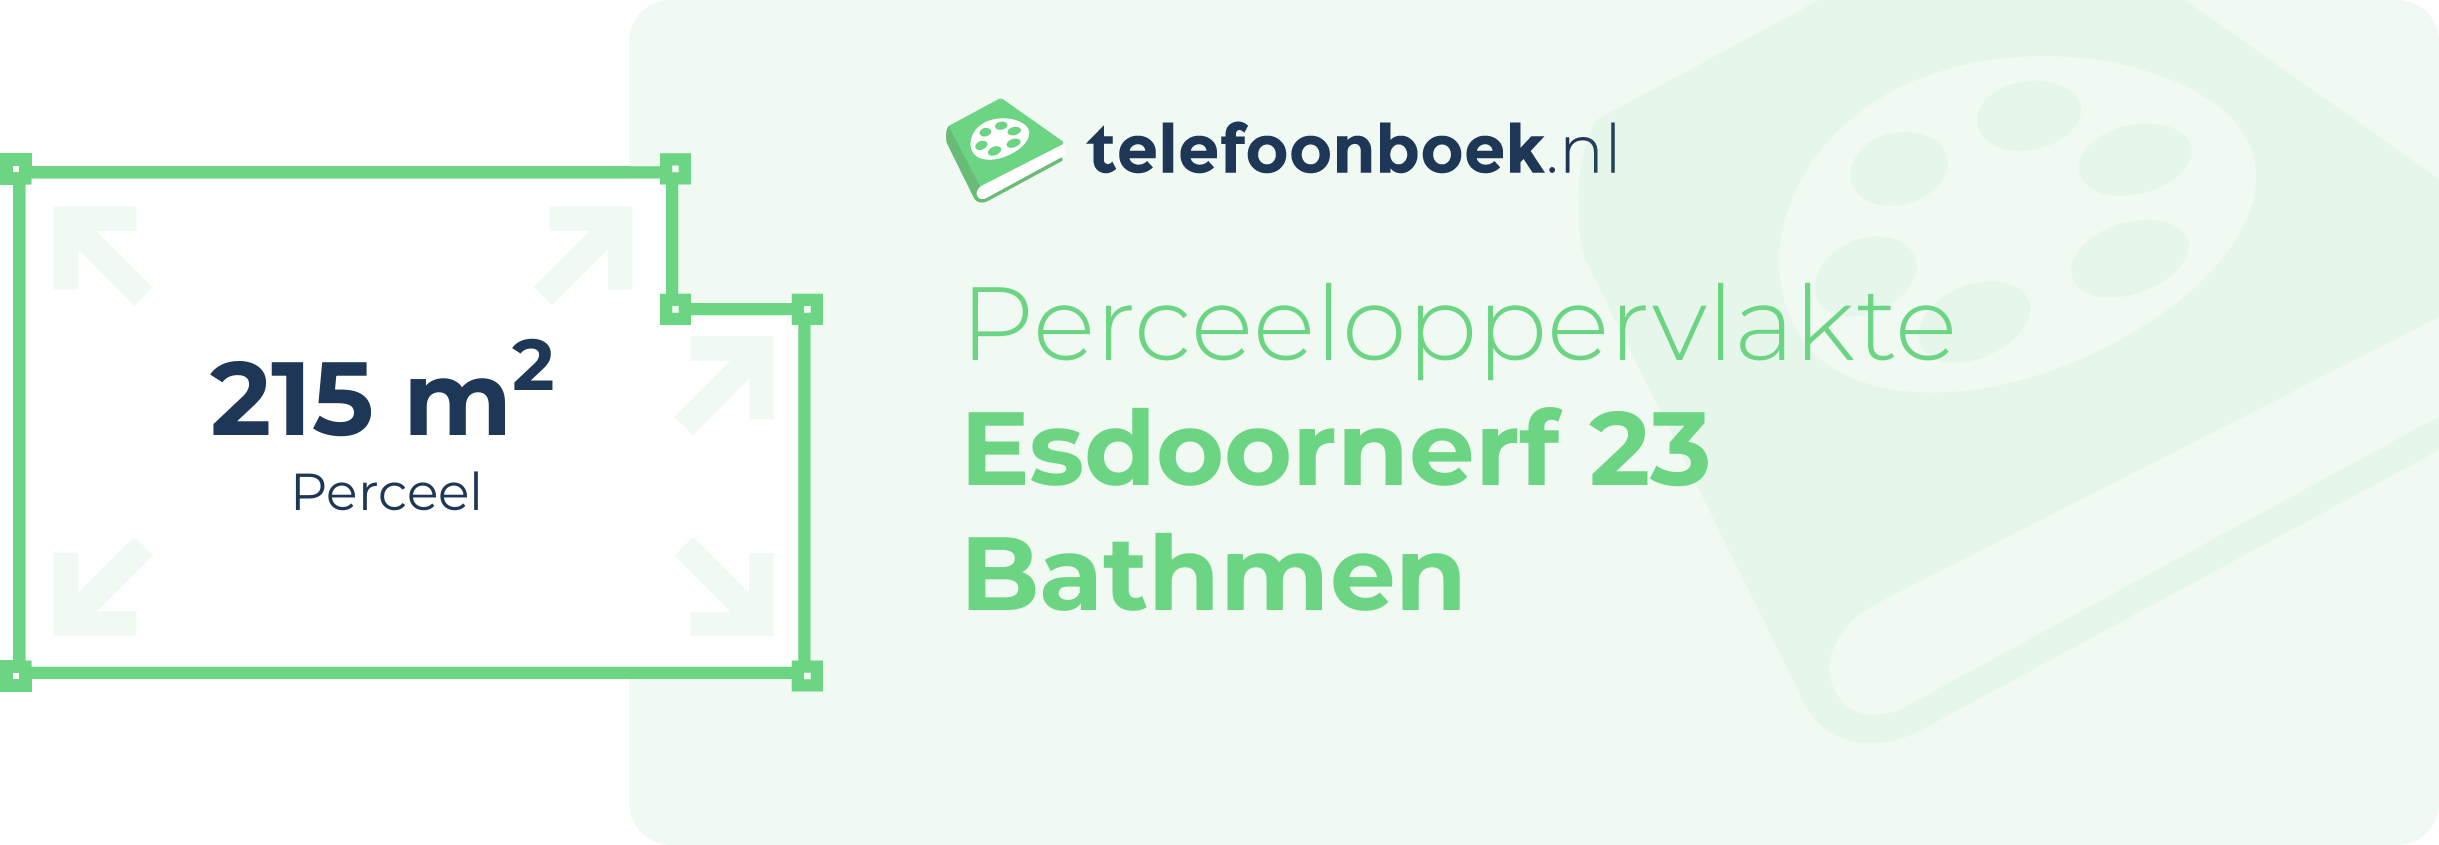 Perceeloppervlakte Esdoornerf 23 Bathmen